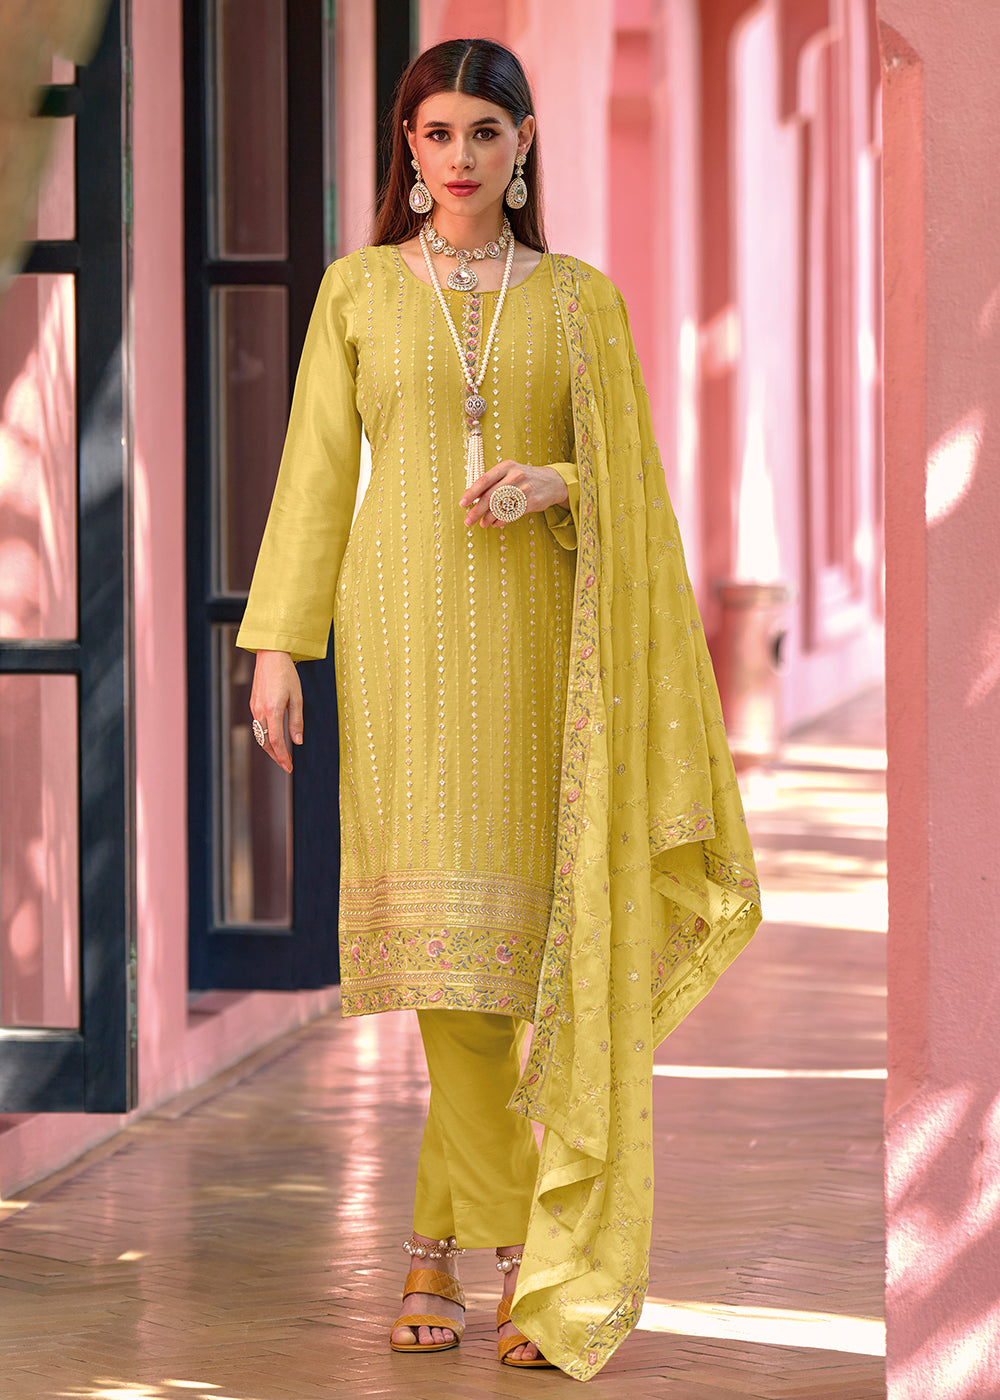 Buy Now Pakistani Style Brilliant Yellow Embroidered Eid Wear Kurta Set Online in USA, UK, Canada & Worldwide at Empress Clothing.